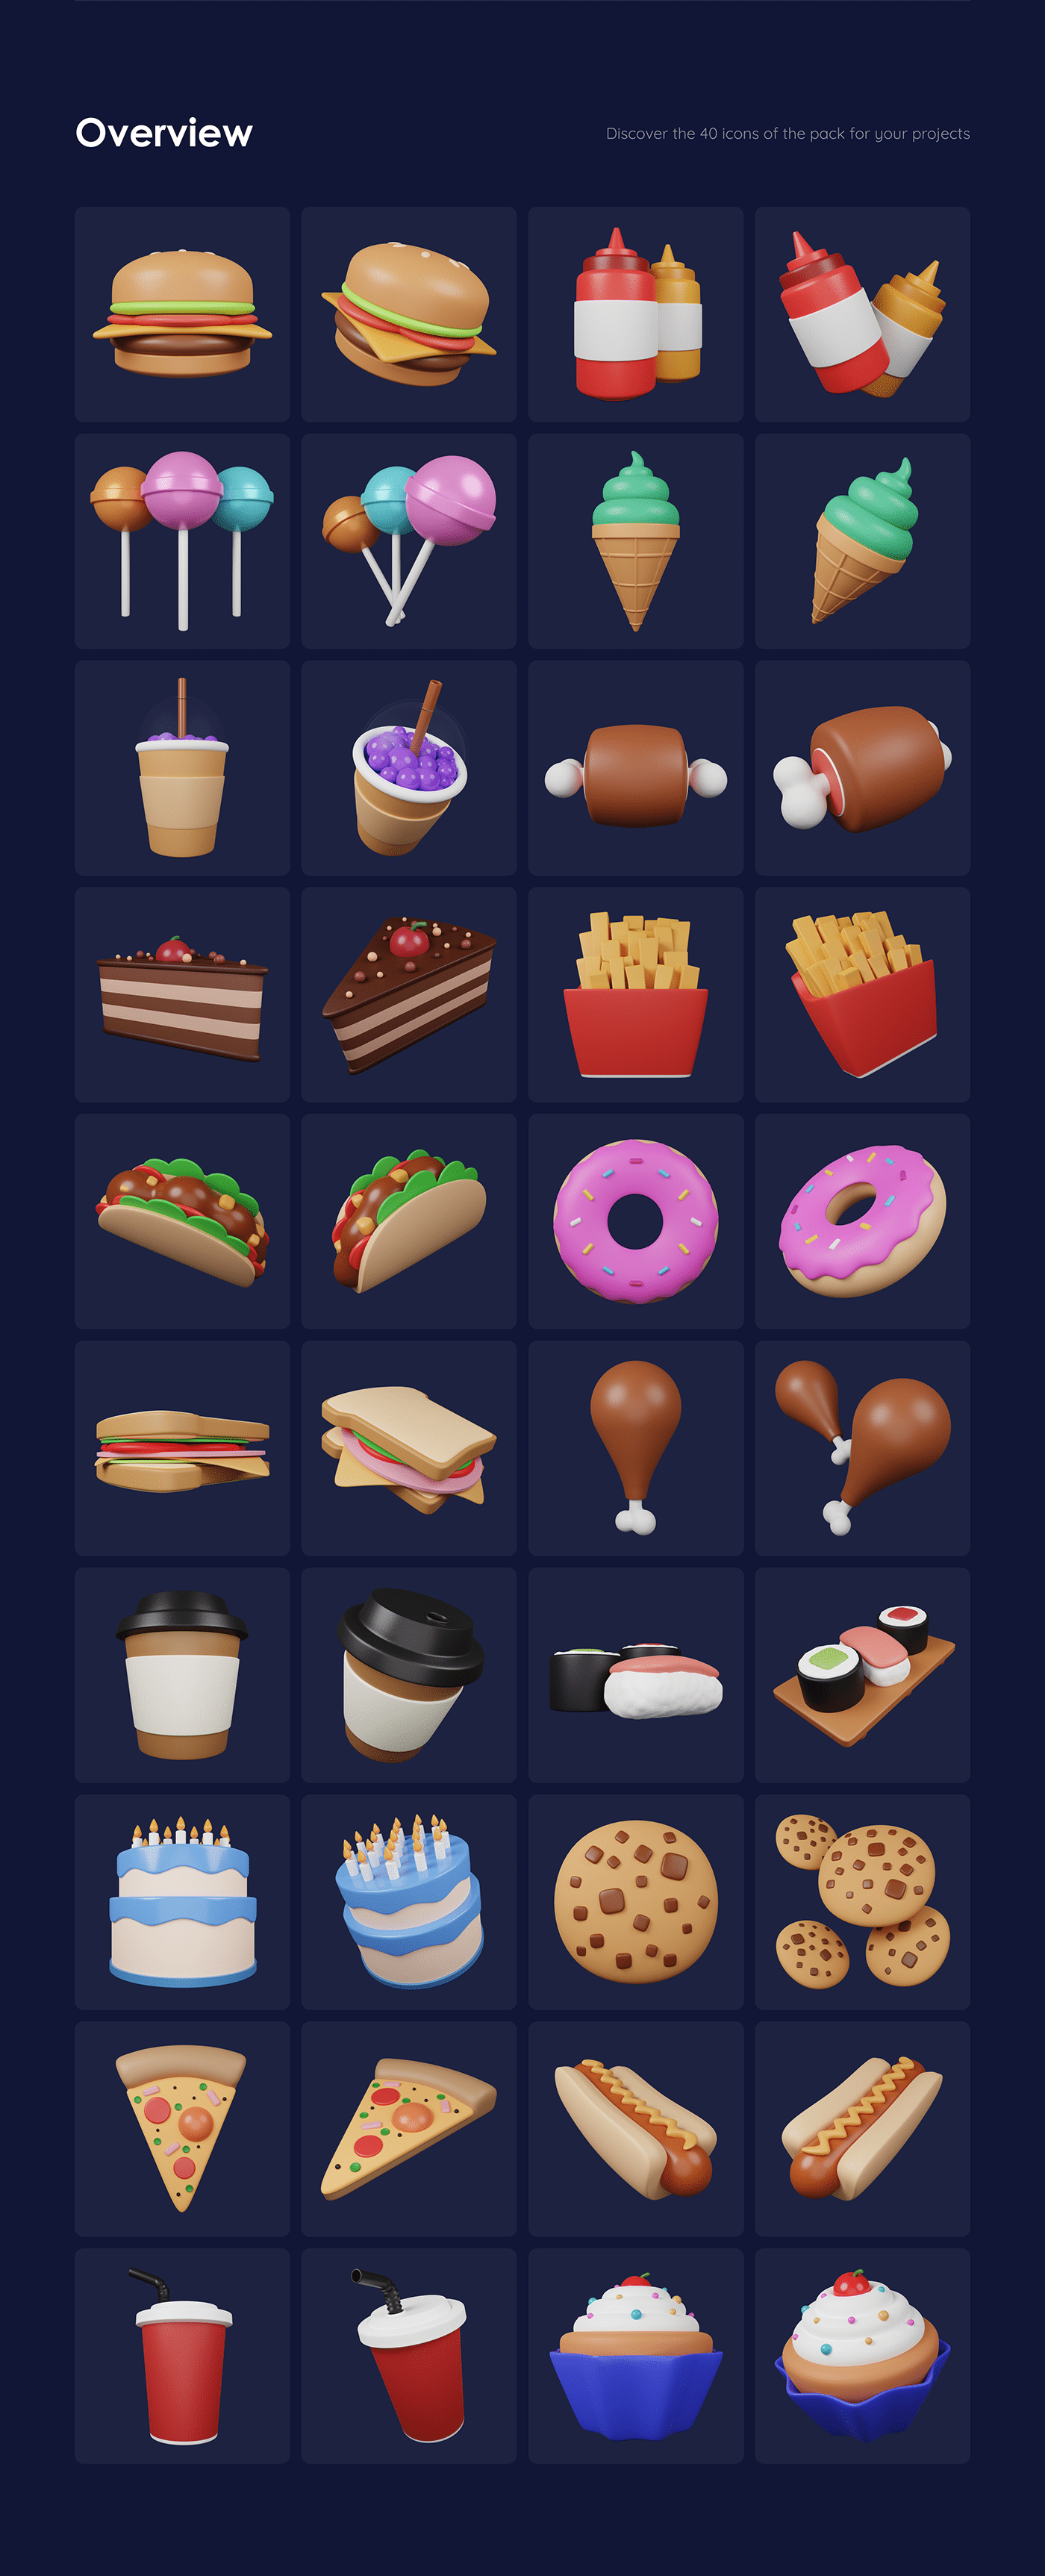 3D 3D Assets 3d icons app assets Food  icons icons pack illustration 3d junk food